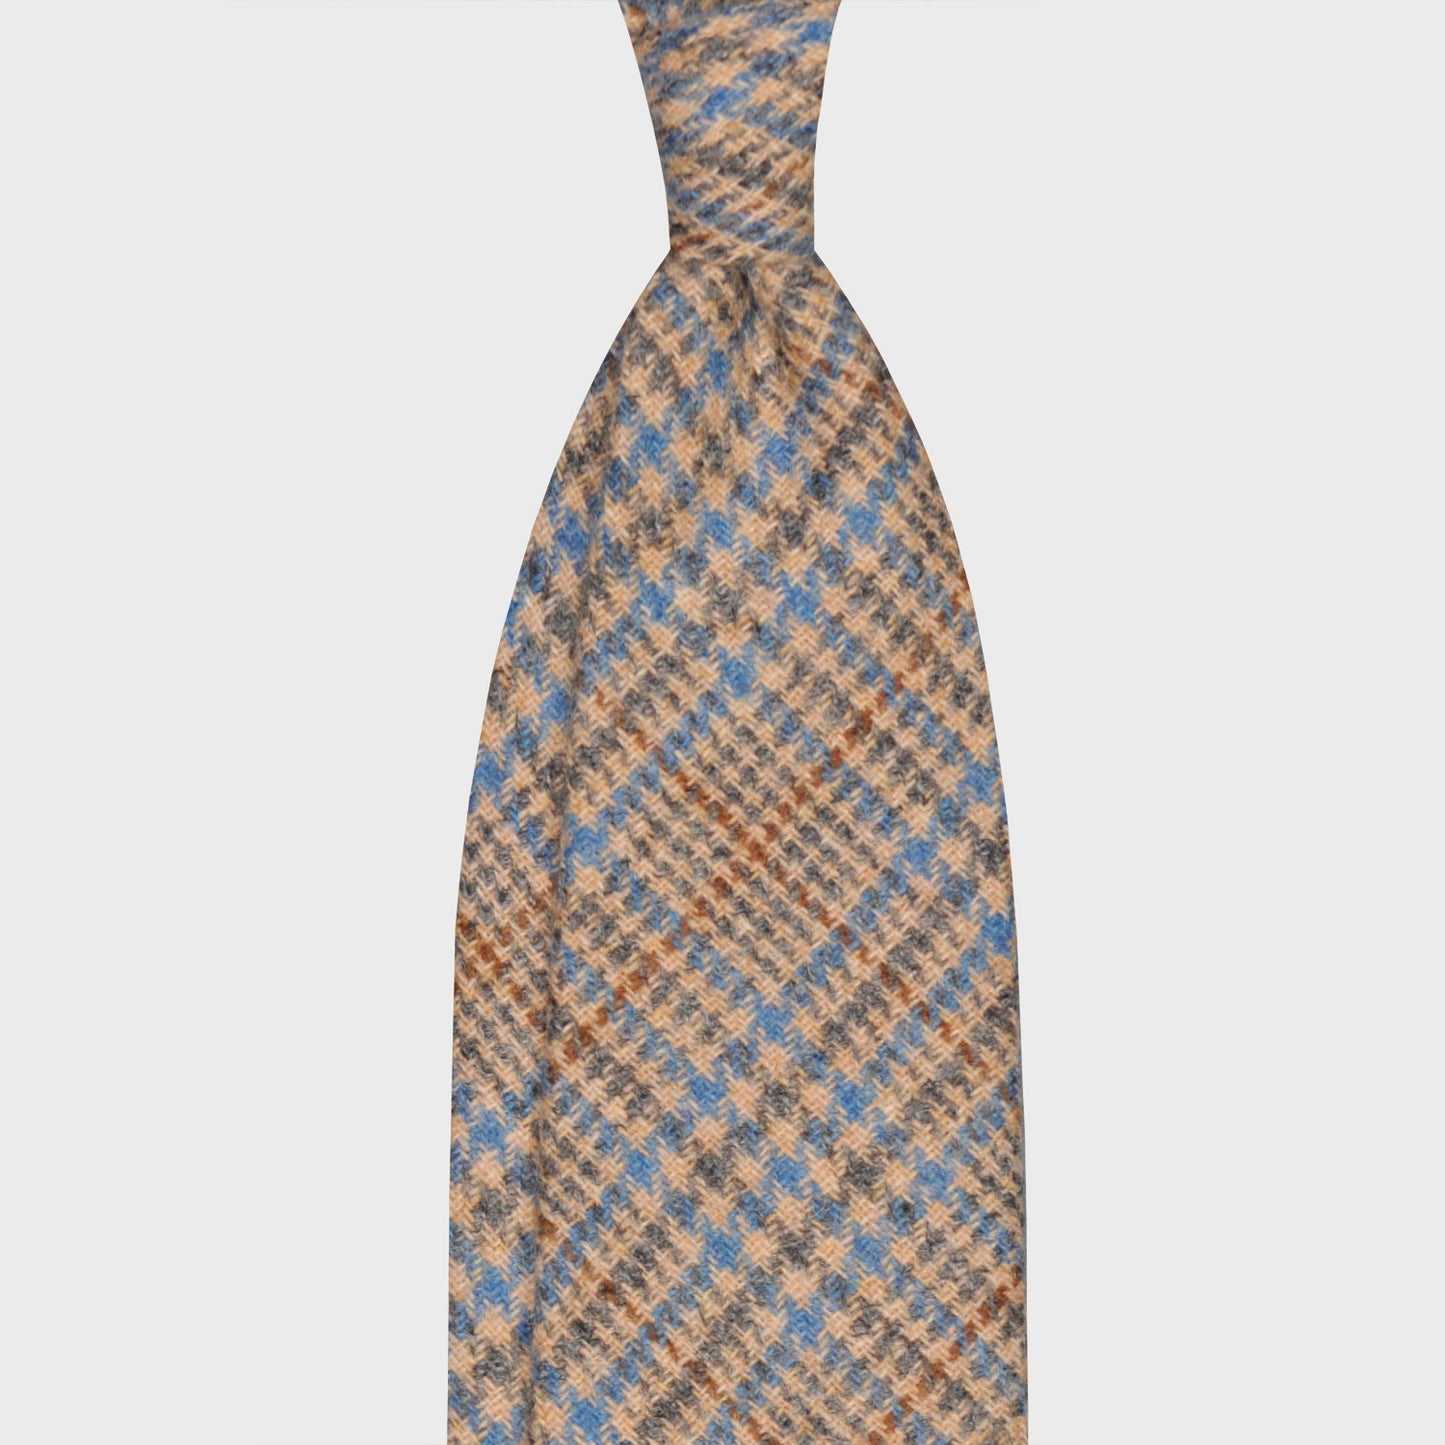 F.Marino Tweed Tie 3 Folds Prince of Wales Sky-Wools Boutique Uomo